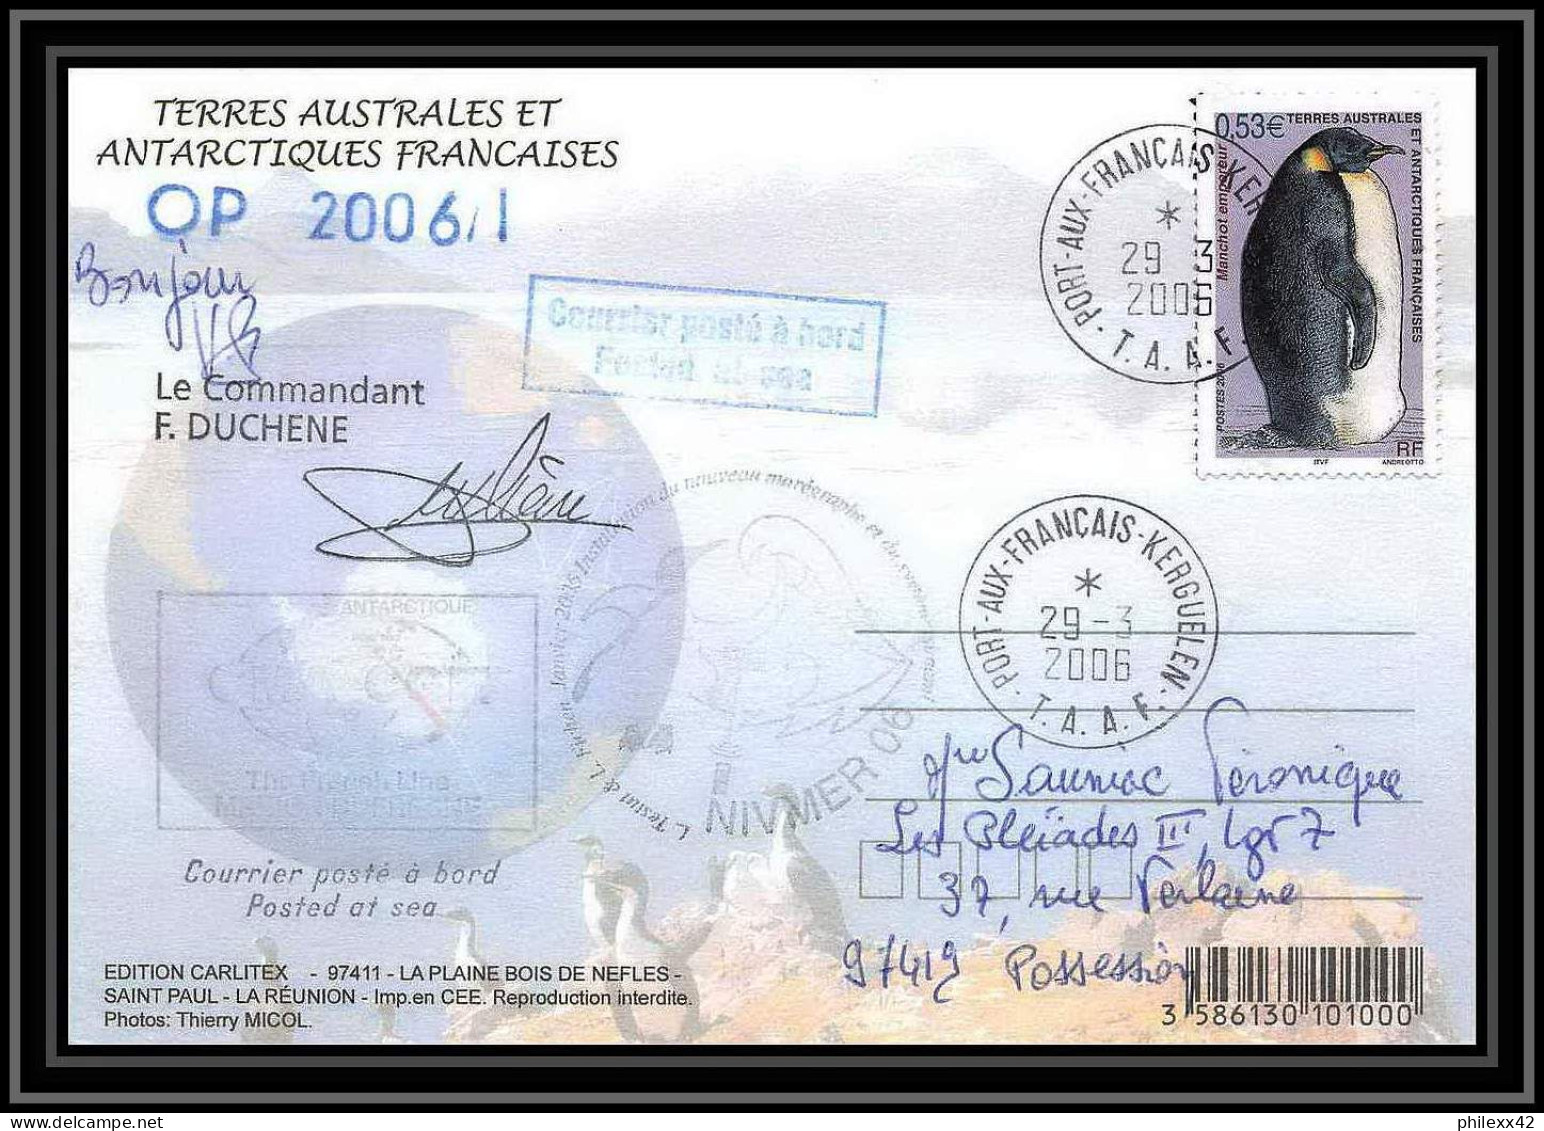 2634 ANTARCTIC Terres Australes (taaf)-carte Postale Dufresne 2 Signé Signed OP 2006/1 N°445 29/3/2006 - Covers & Documents